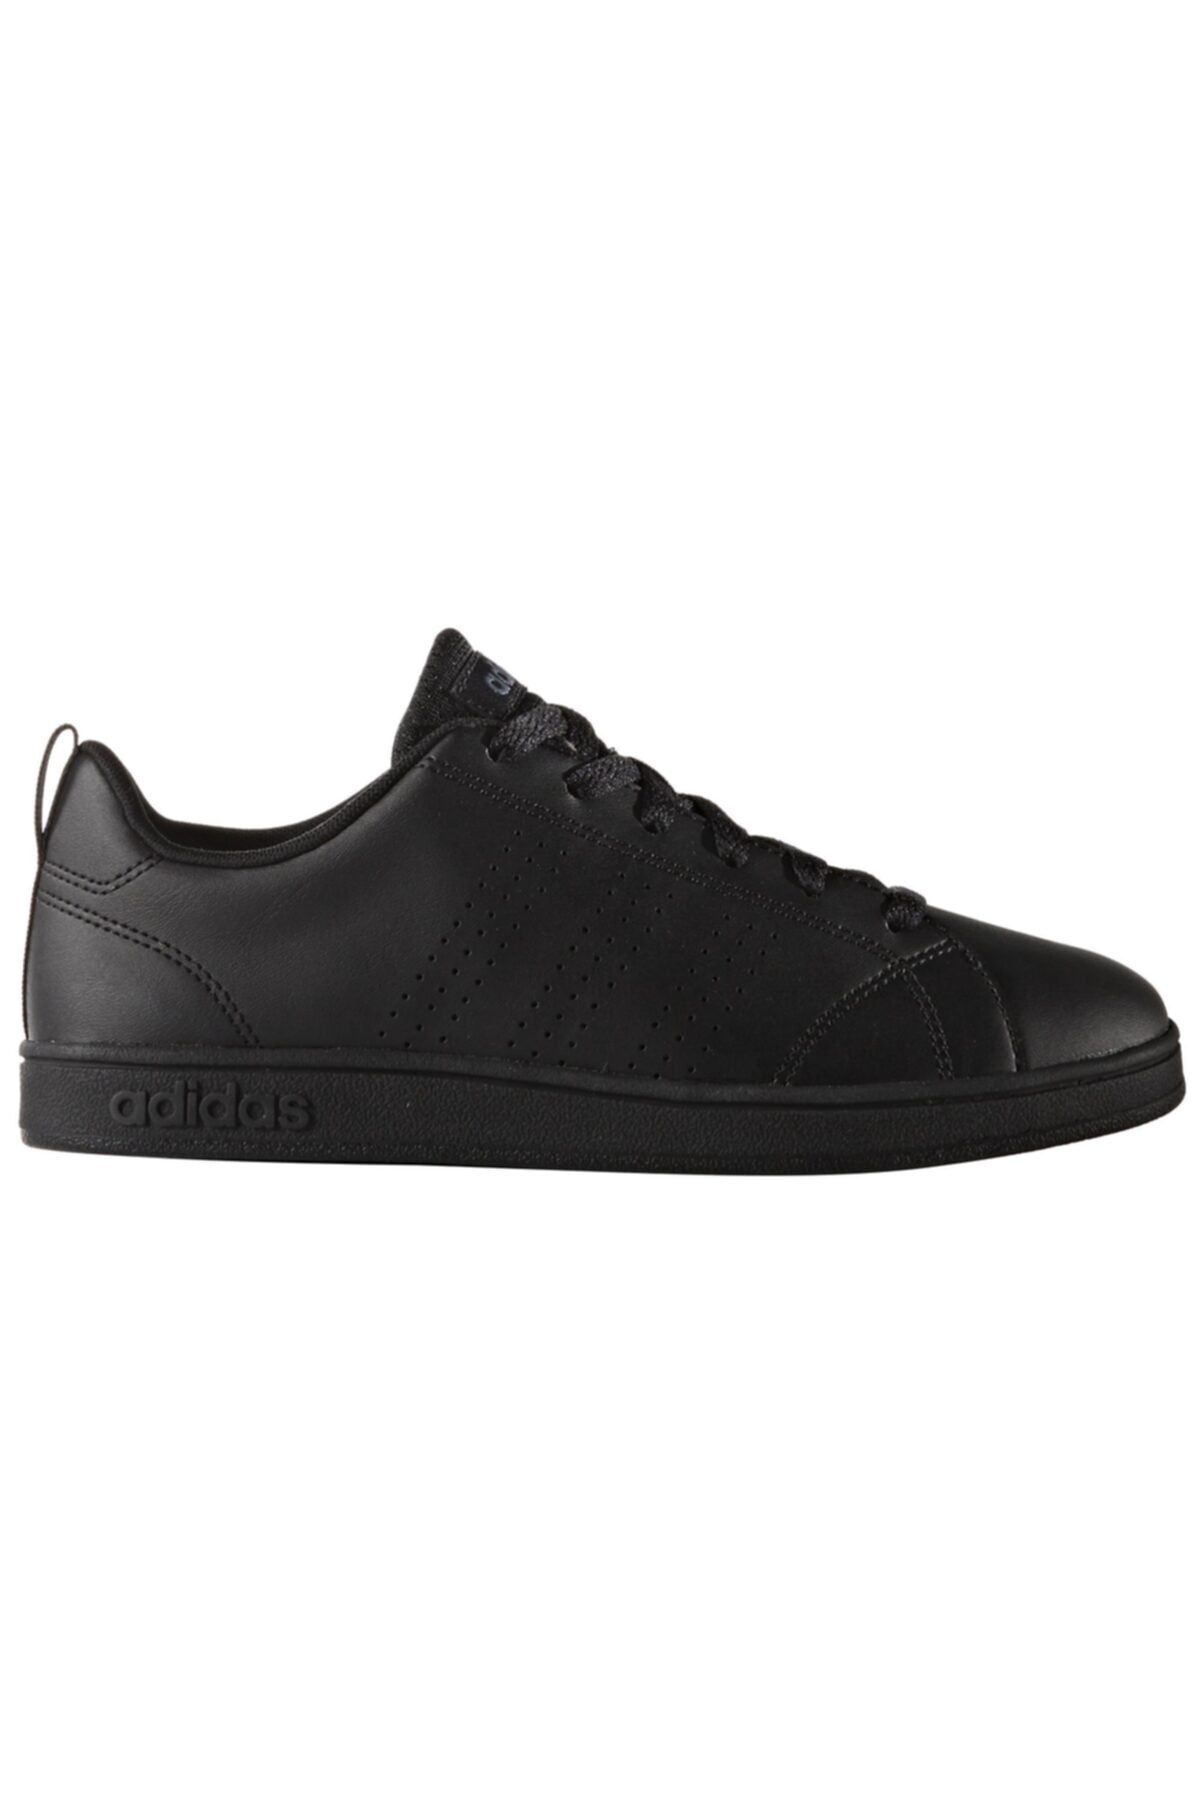 adidas VS ADVANTAGE CLEAN K Siyah Kız Çocuk Sneaker 100224476